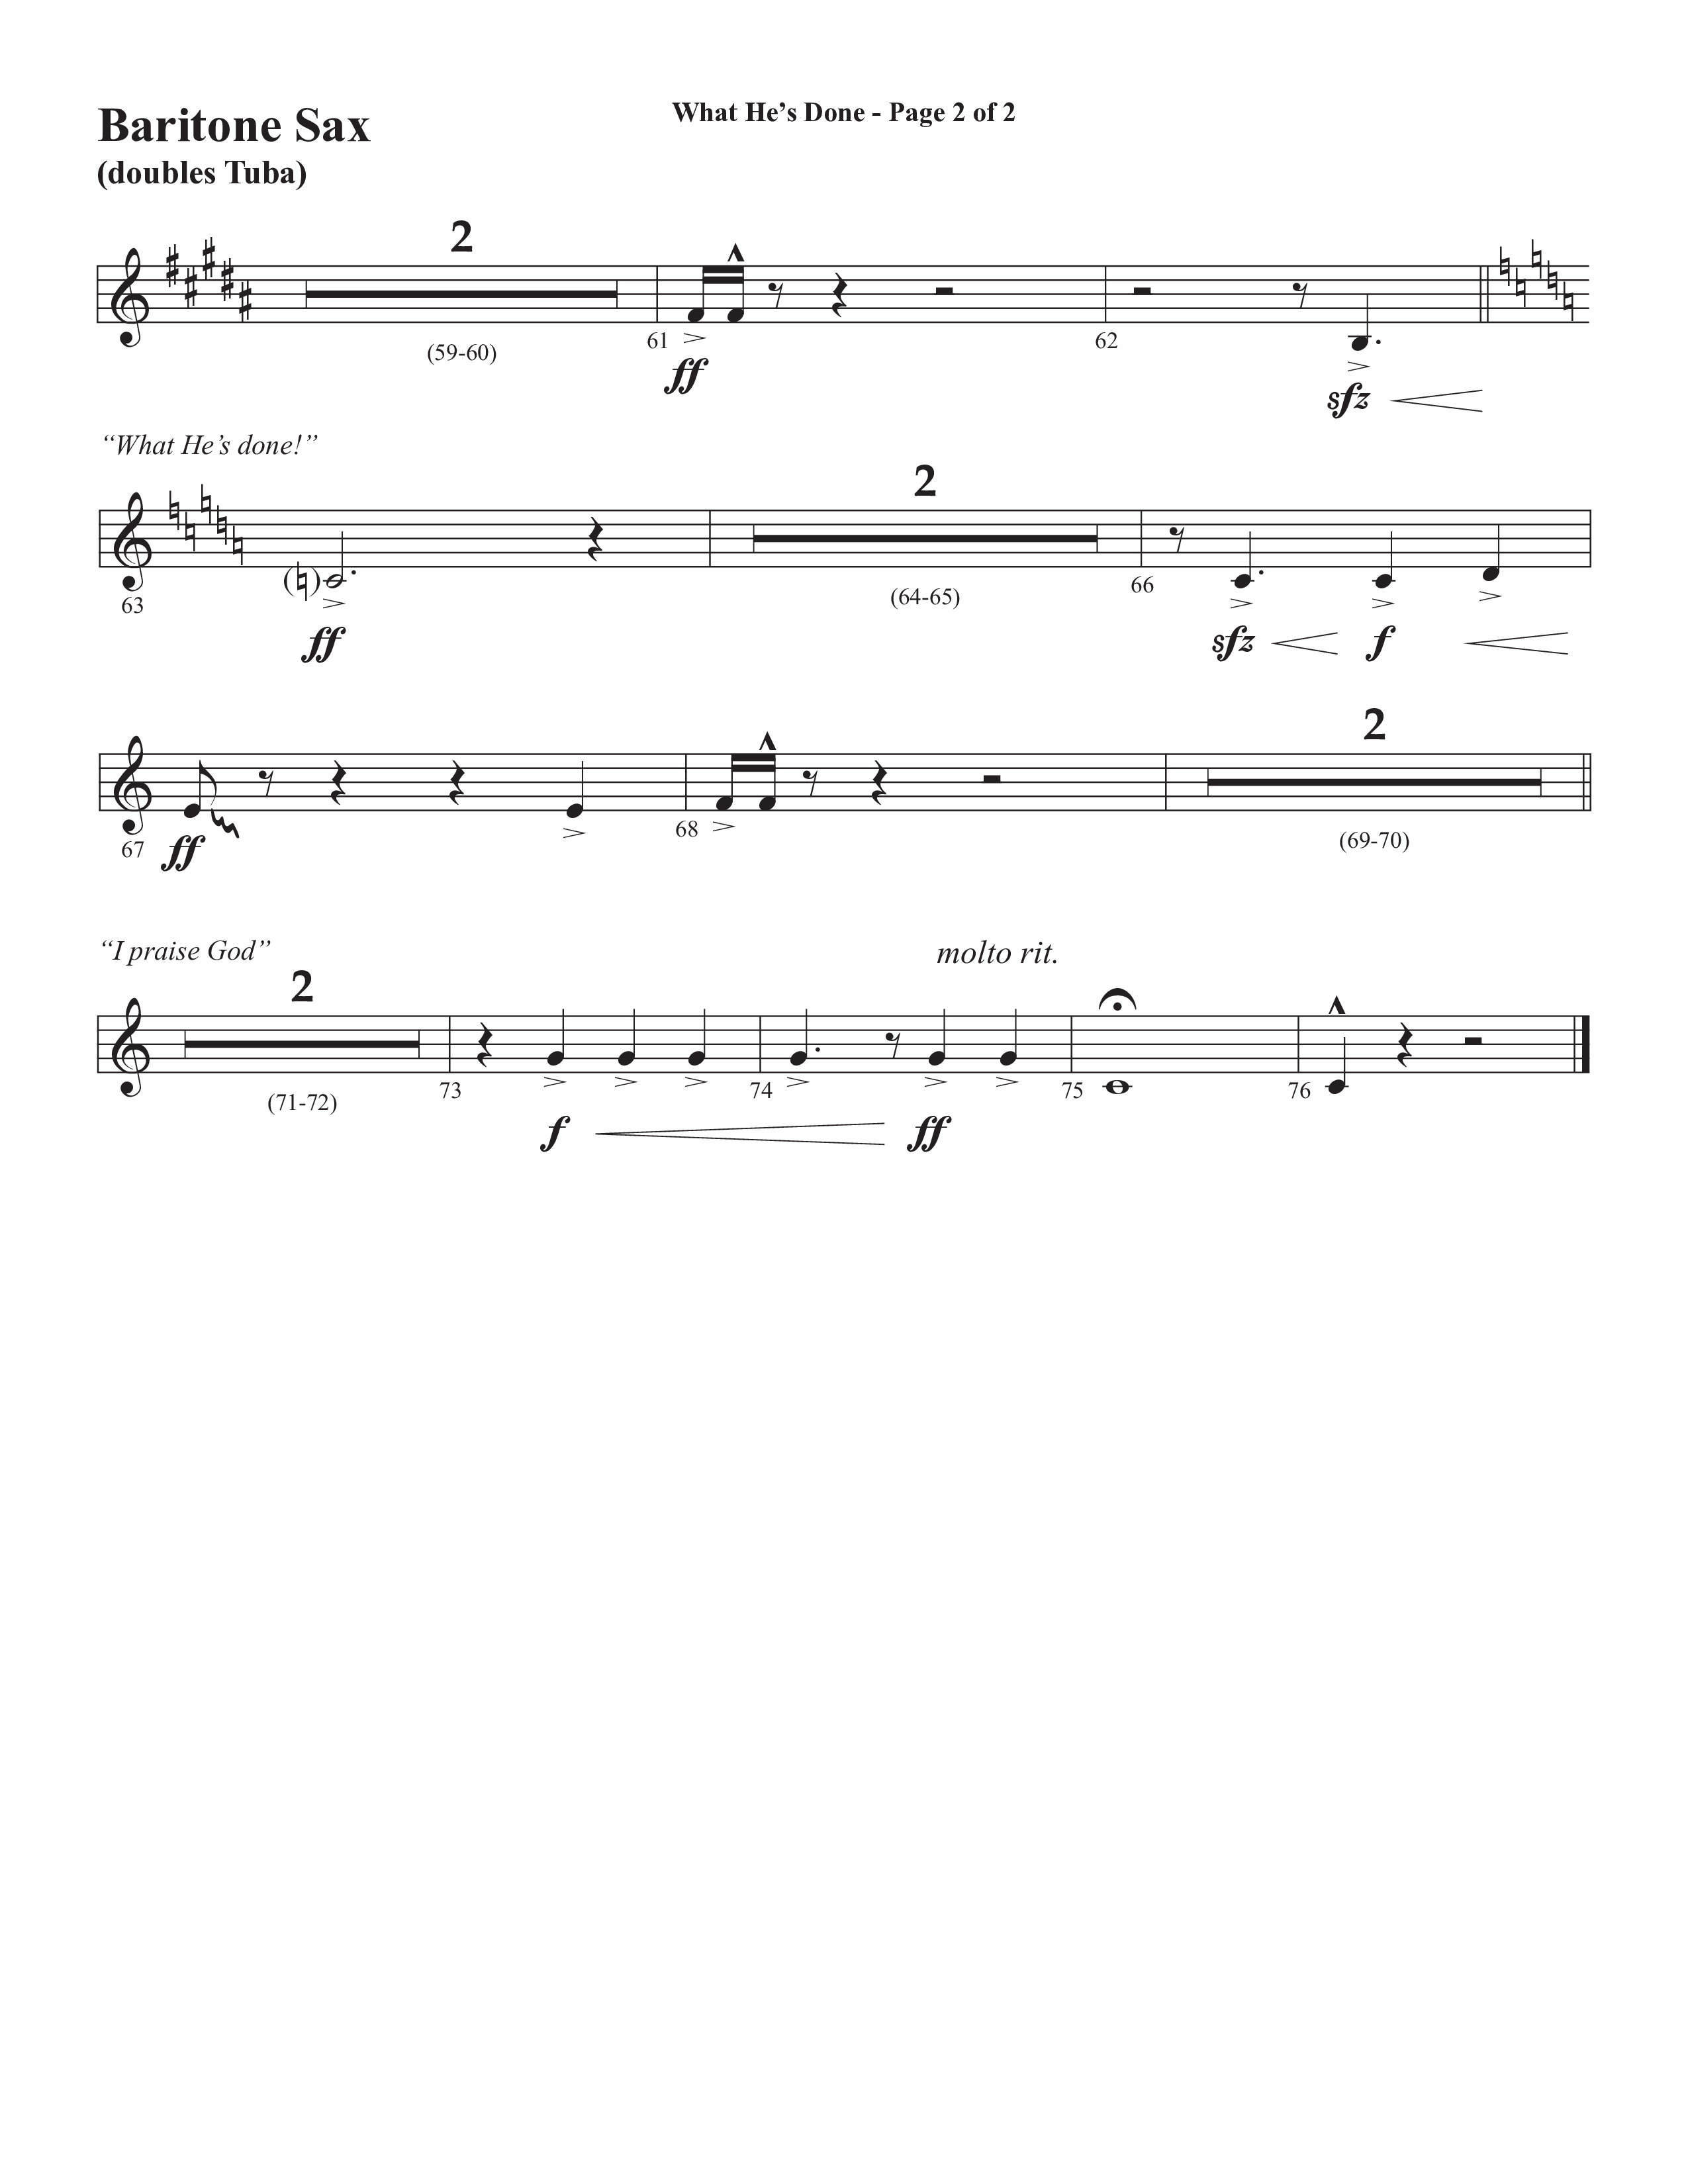 What He's Done (Choral Anthem SATB) Bari Sax (Semsen Music / Arr. Cliff Duren)